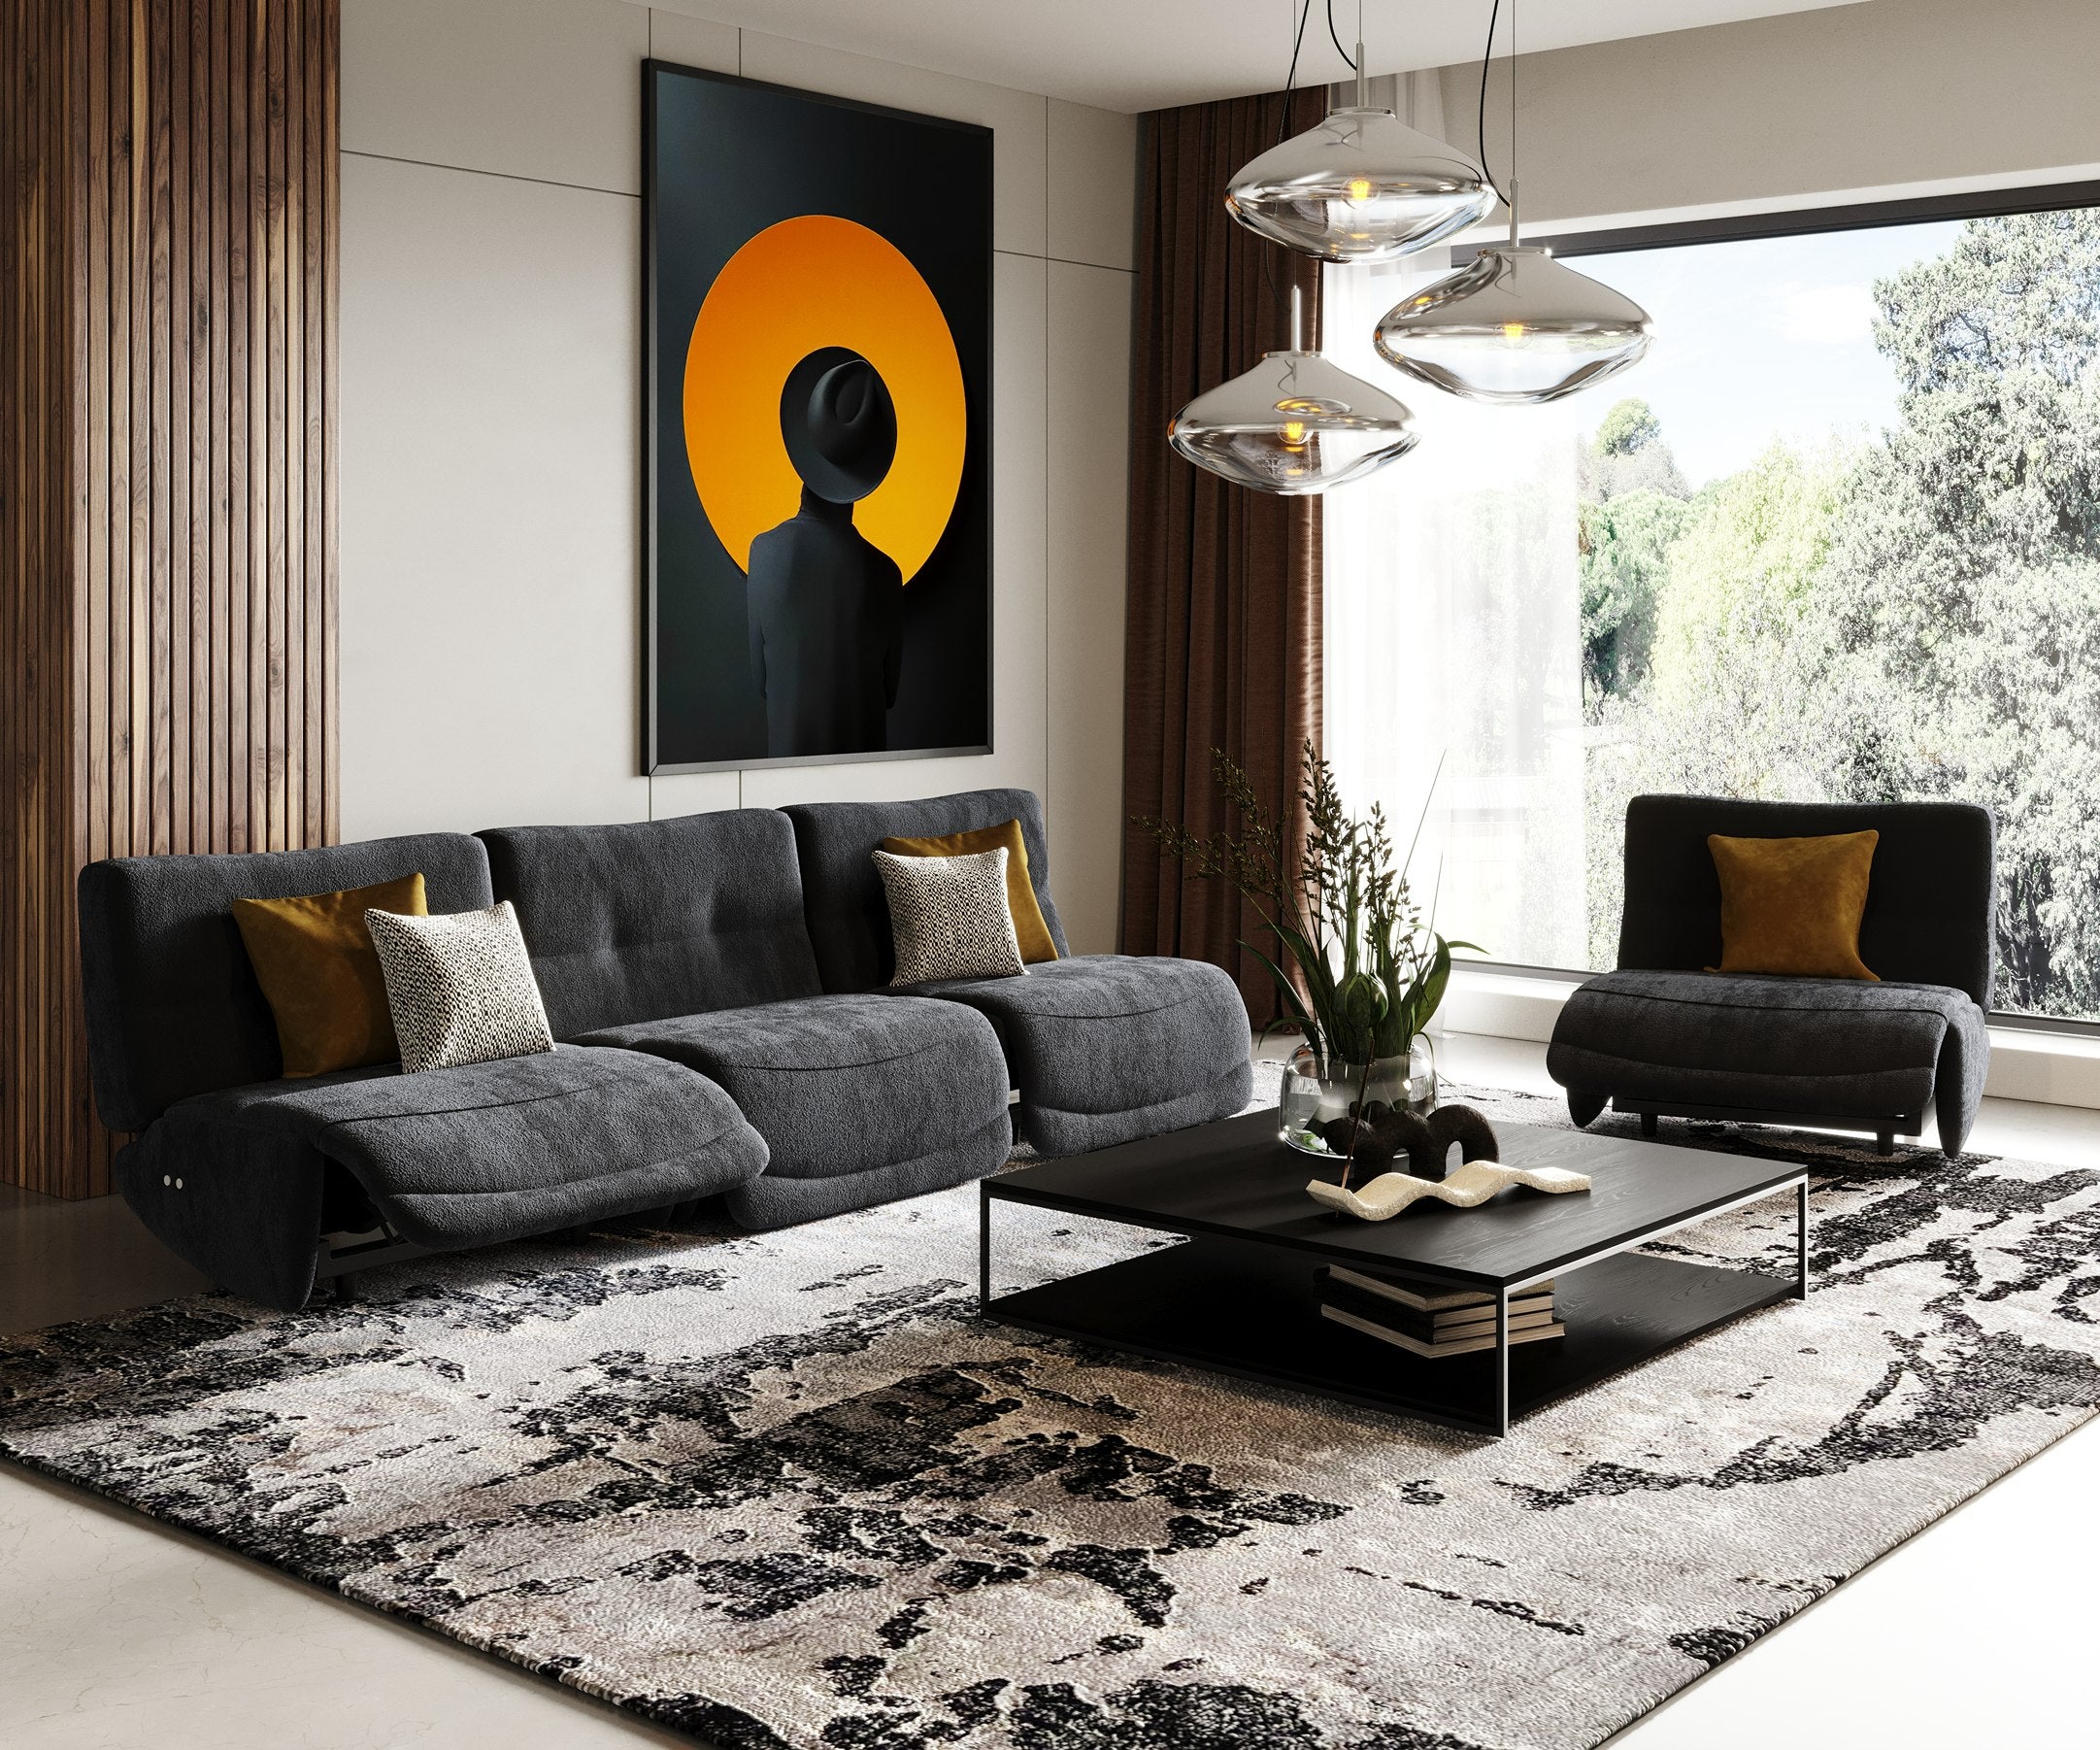 Divani Casa Basil - Modern Fabric Large Sofa With 3 Electric Recliners-Sofa-VIG-Wall2Wall Furnishings